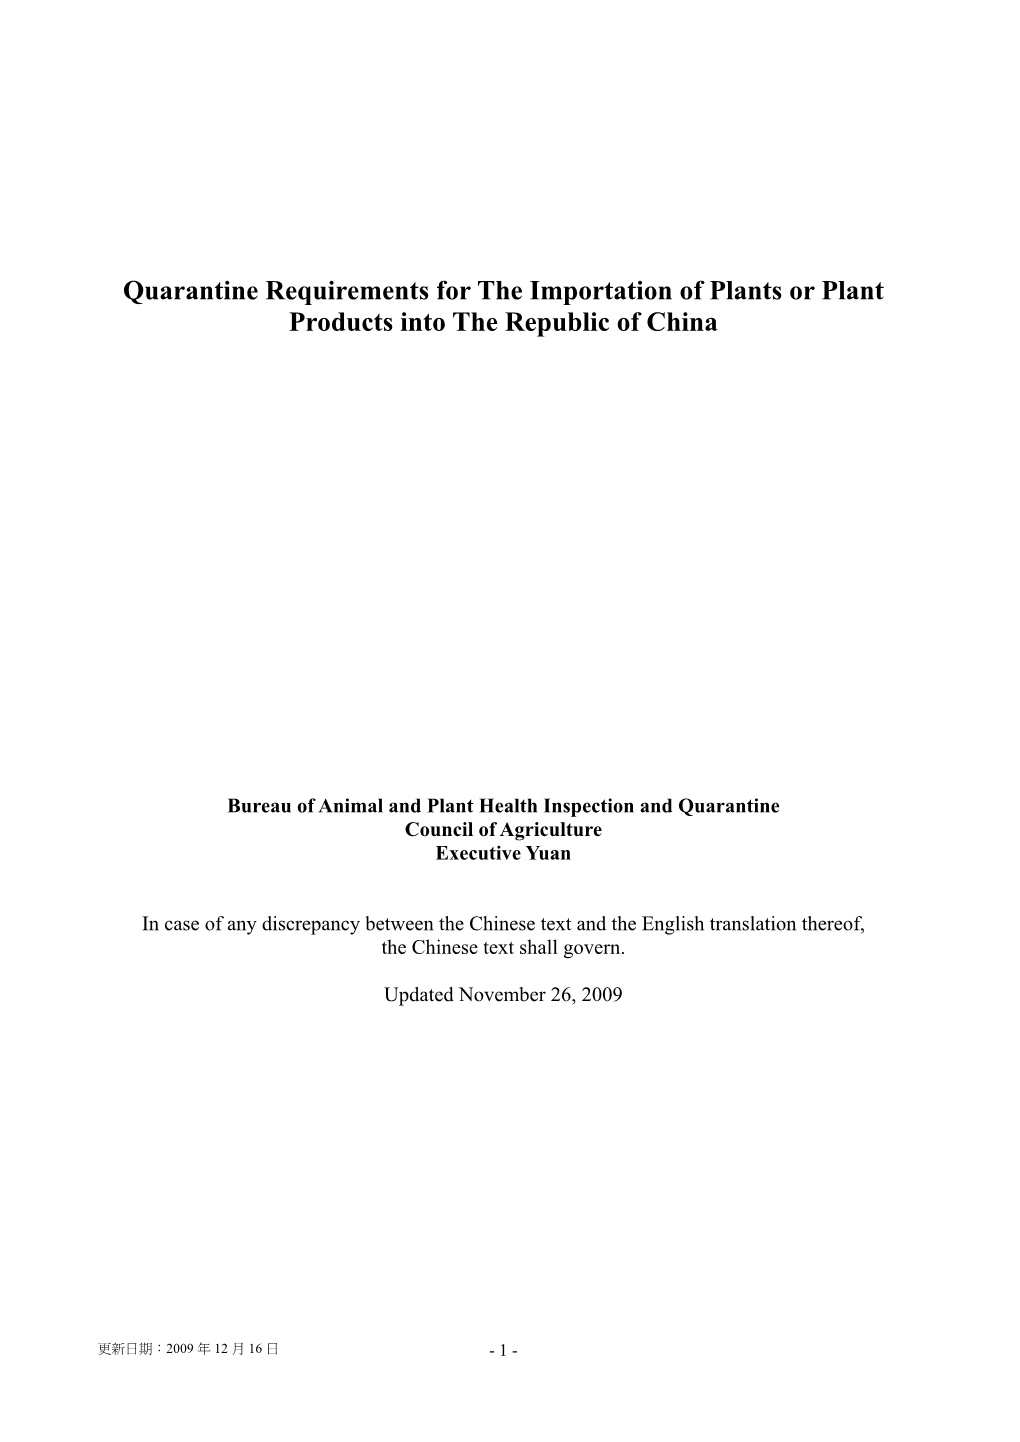 Quarantine Regulation for Importation of Plants